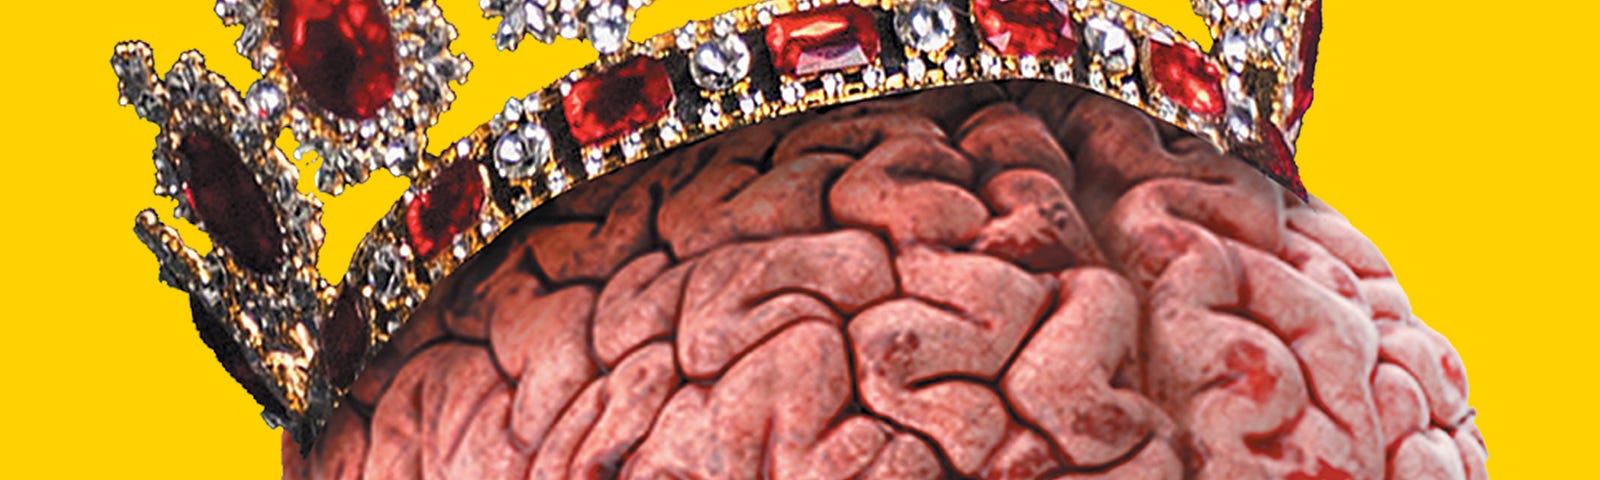 A brain wearing a crown.